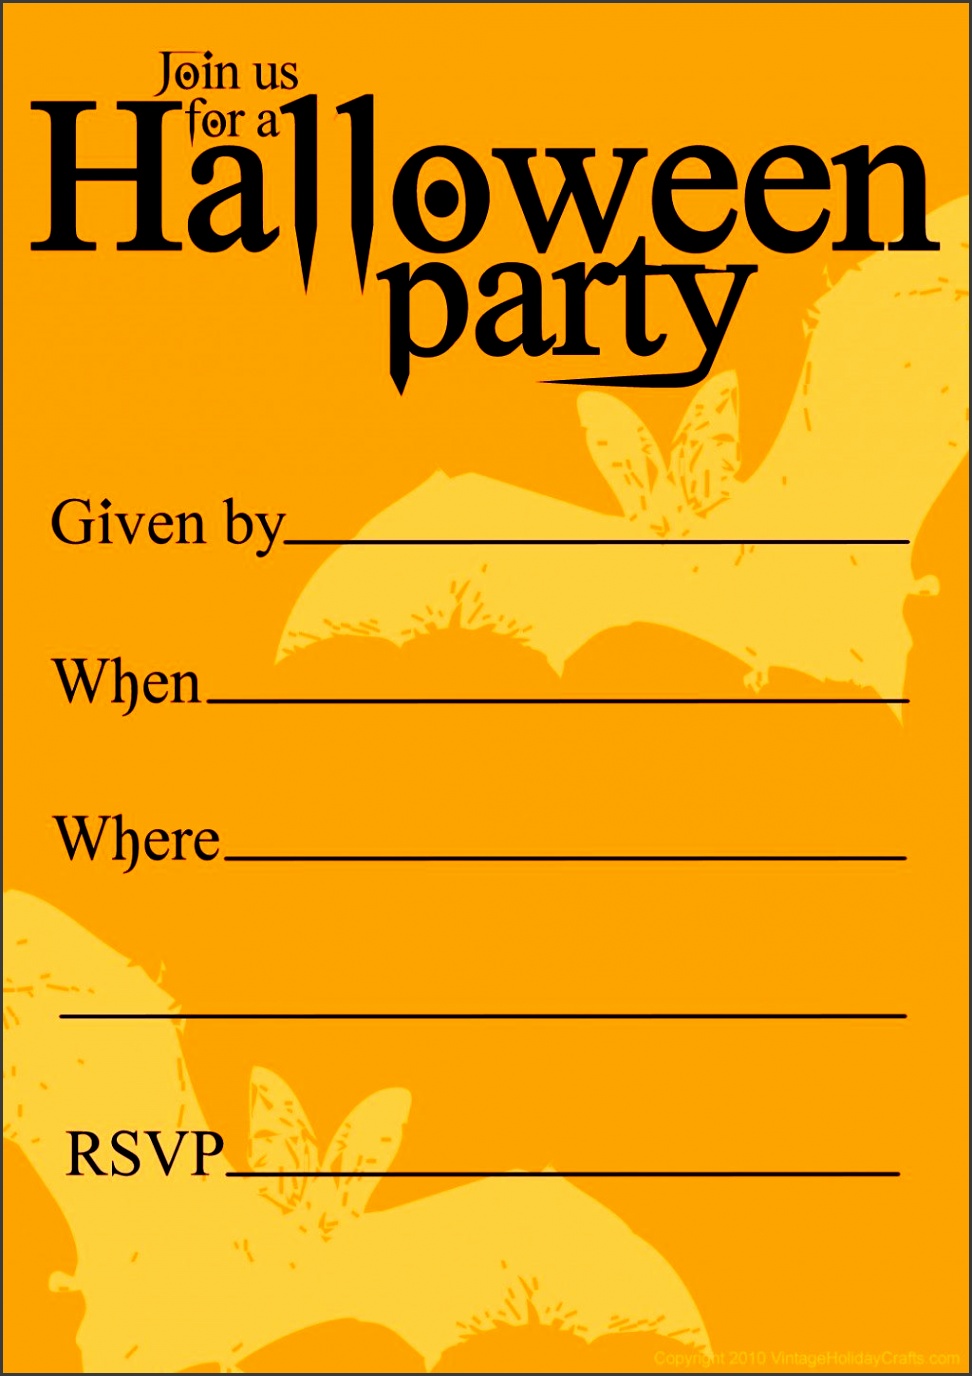 5 Free Halloween Invitation Templates to Email - SampleTemplatess